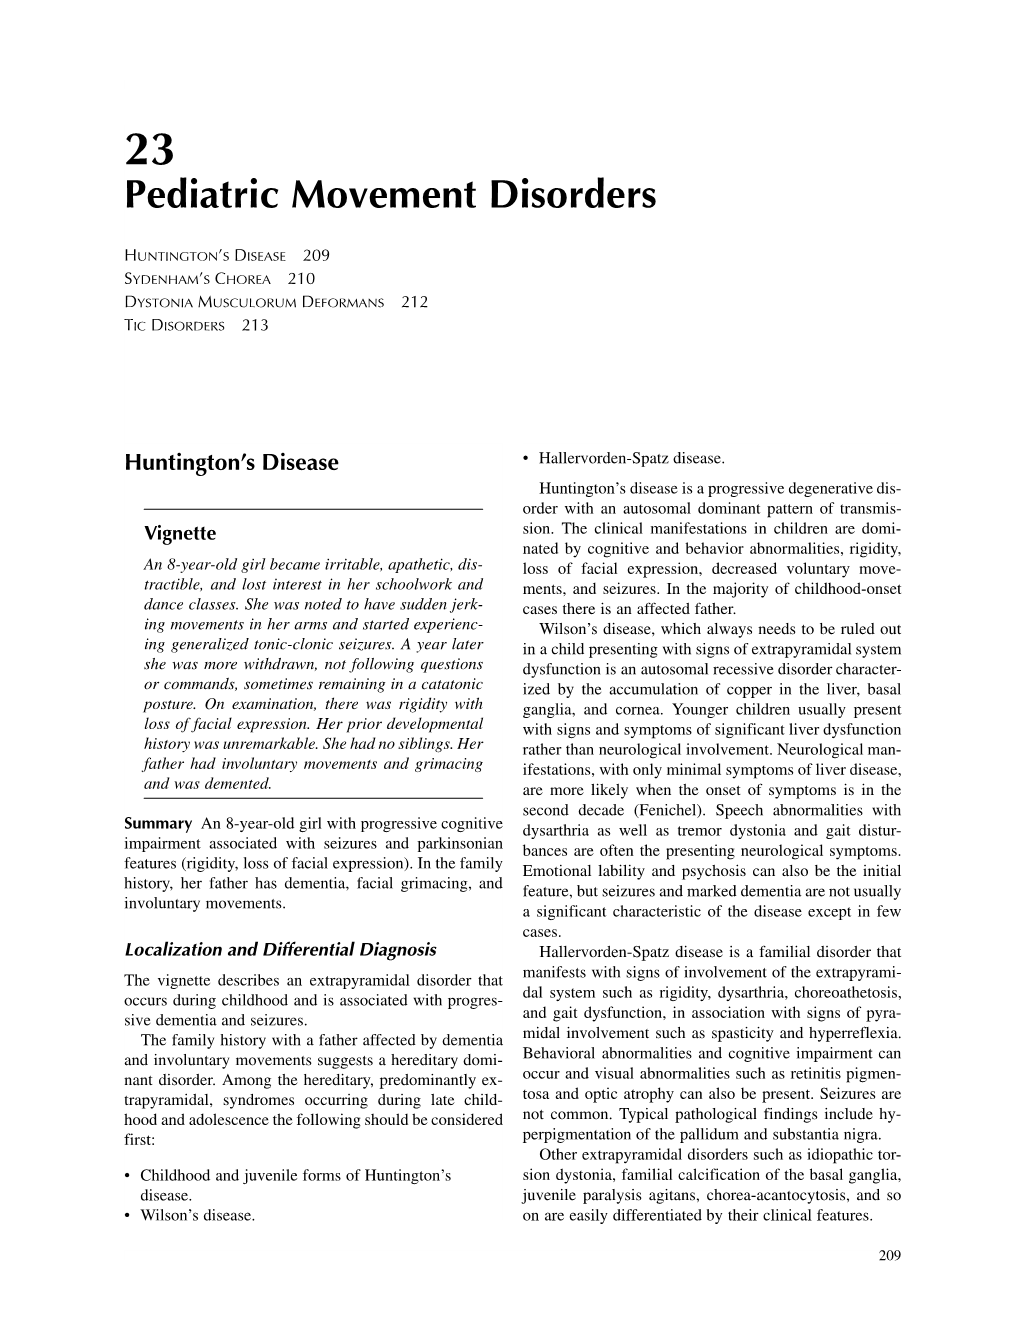 Pediatric Movement Disorders